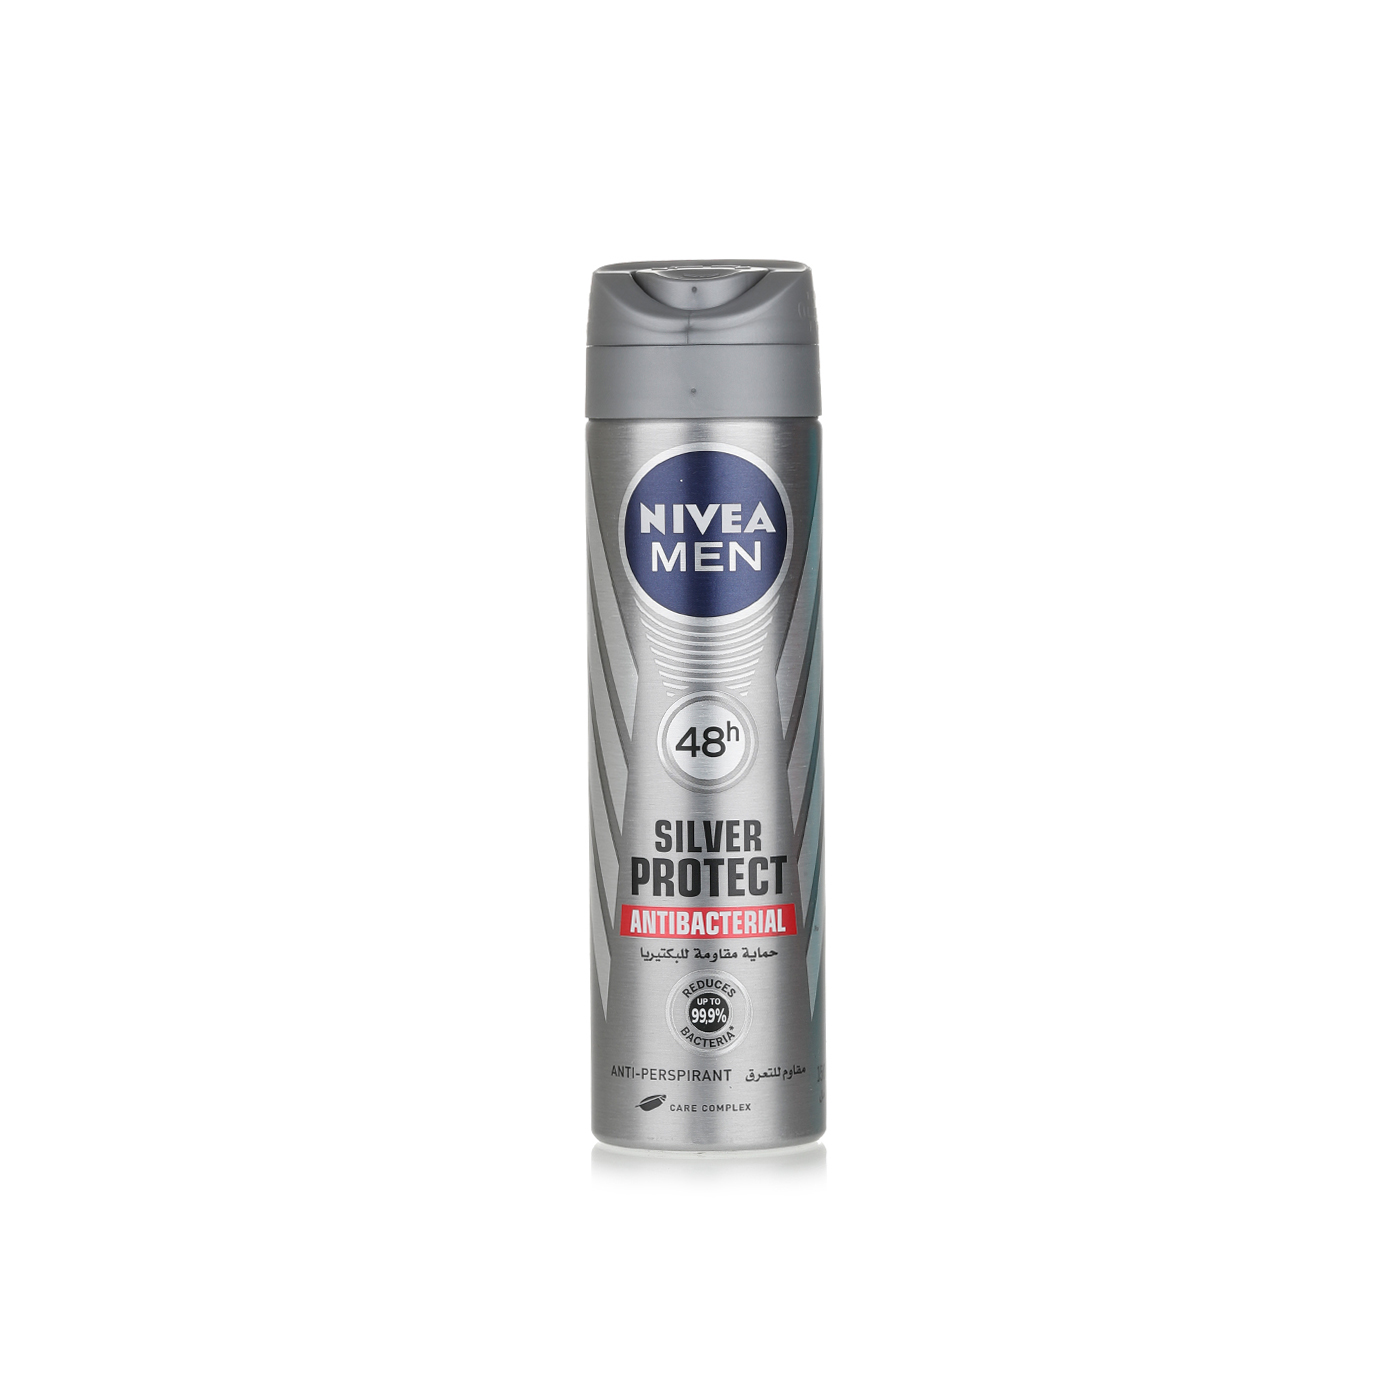 Nivea silver protect deodorant spray for men 150ml - Waitrose UAE ...